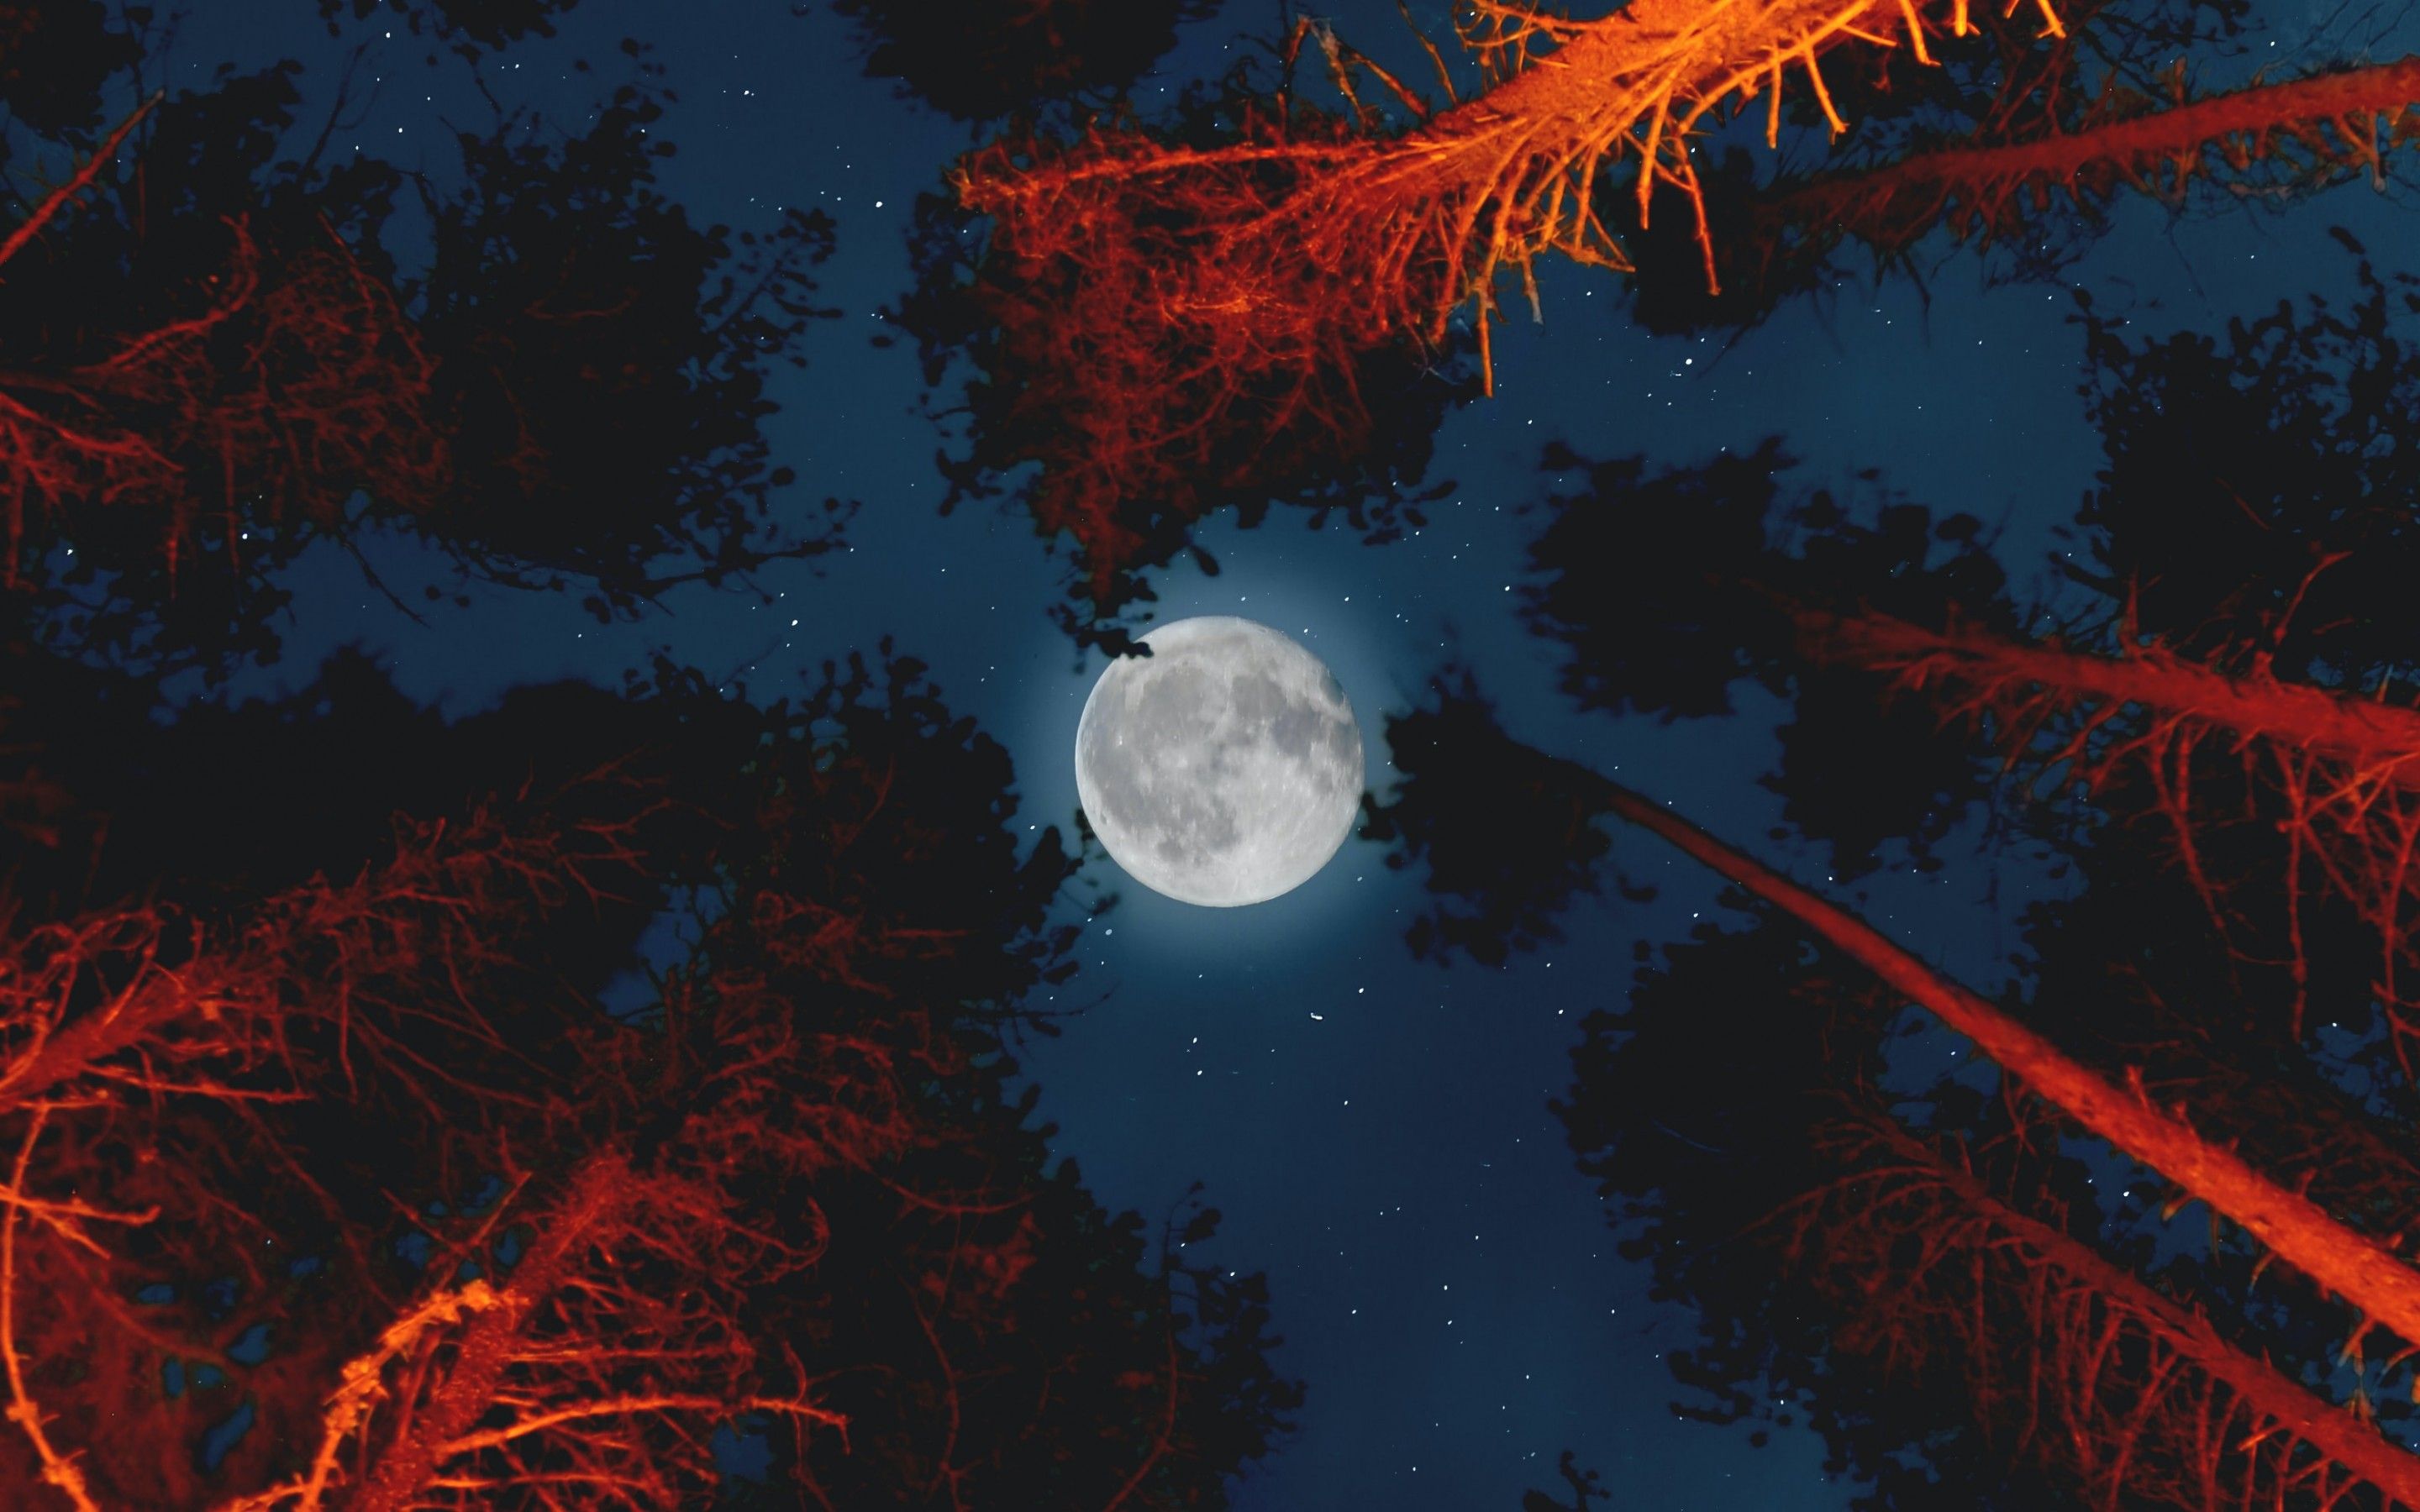 Full moon 4K Wallpaper, Trees, Sky view, Night, Campfire, Outdoor, Woods, Dark, Nature